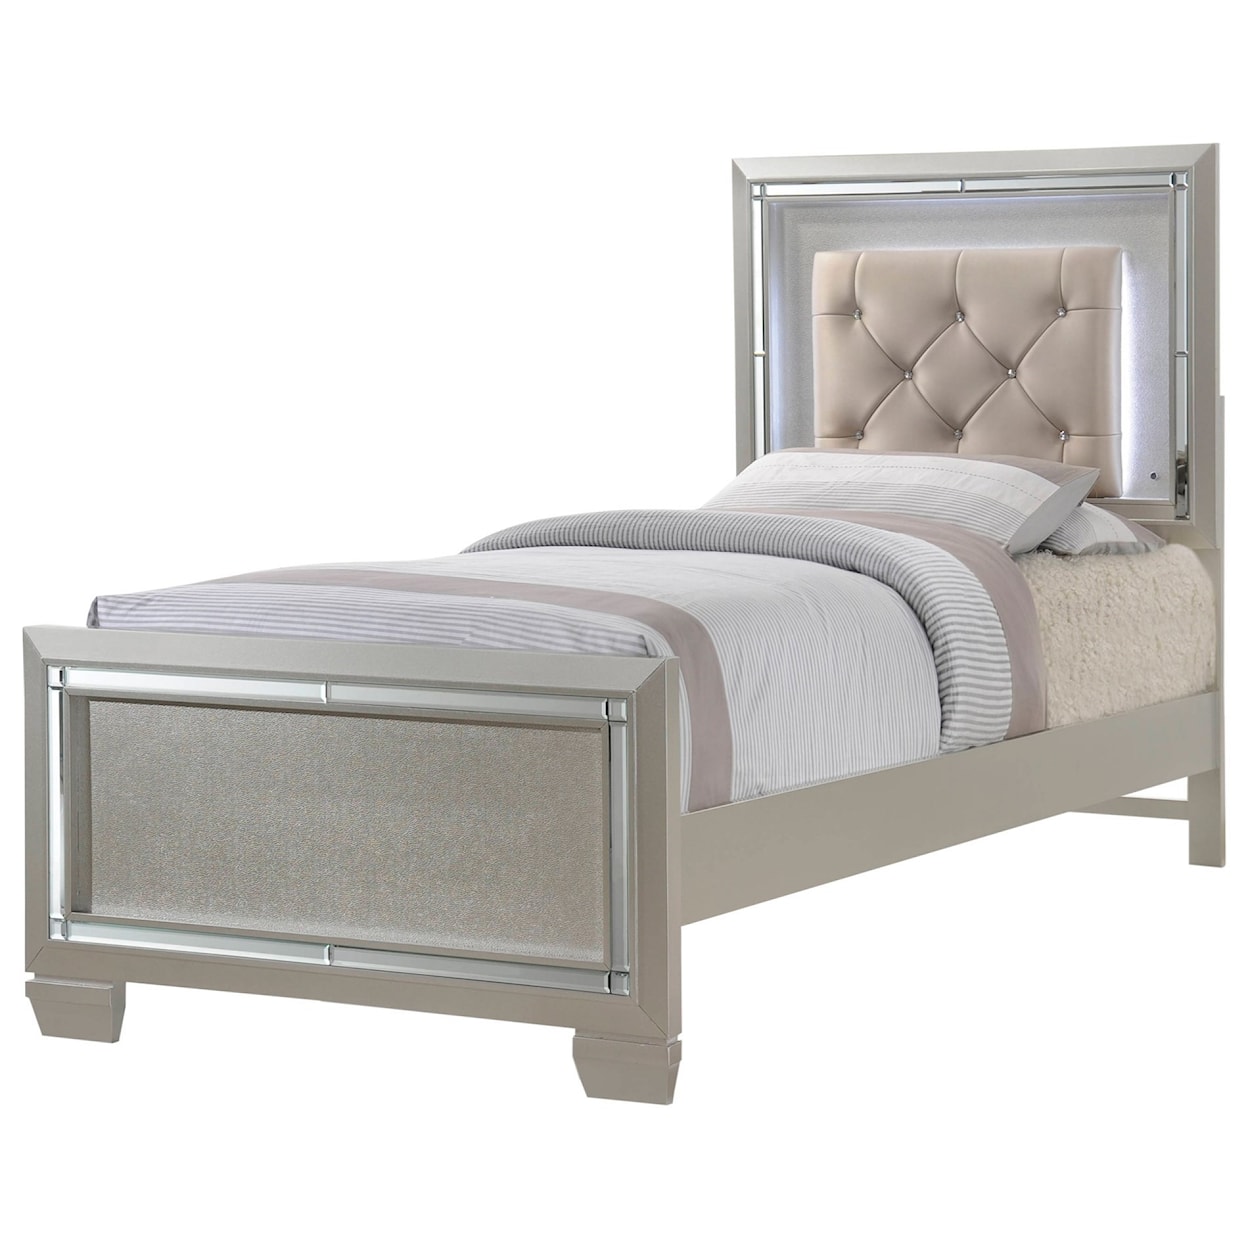 Elements International Platinum Twin Upholstered Bed